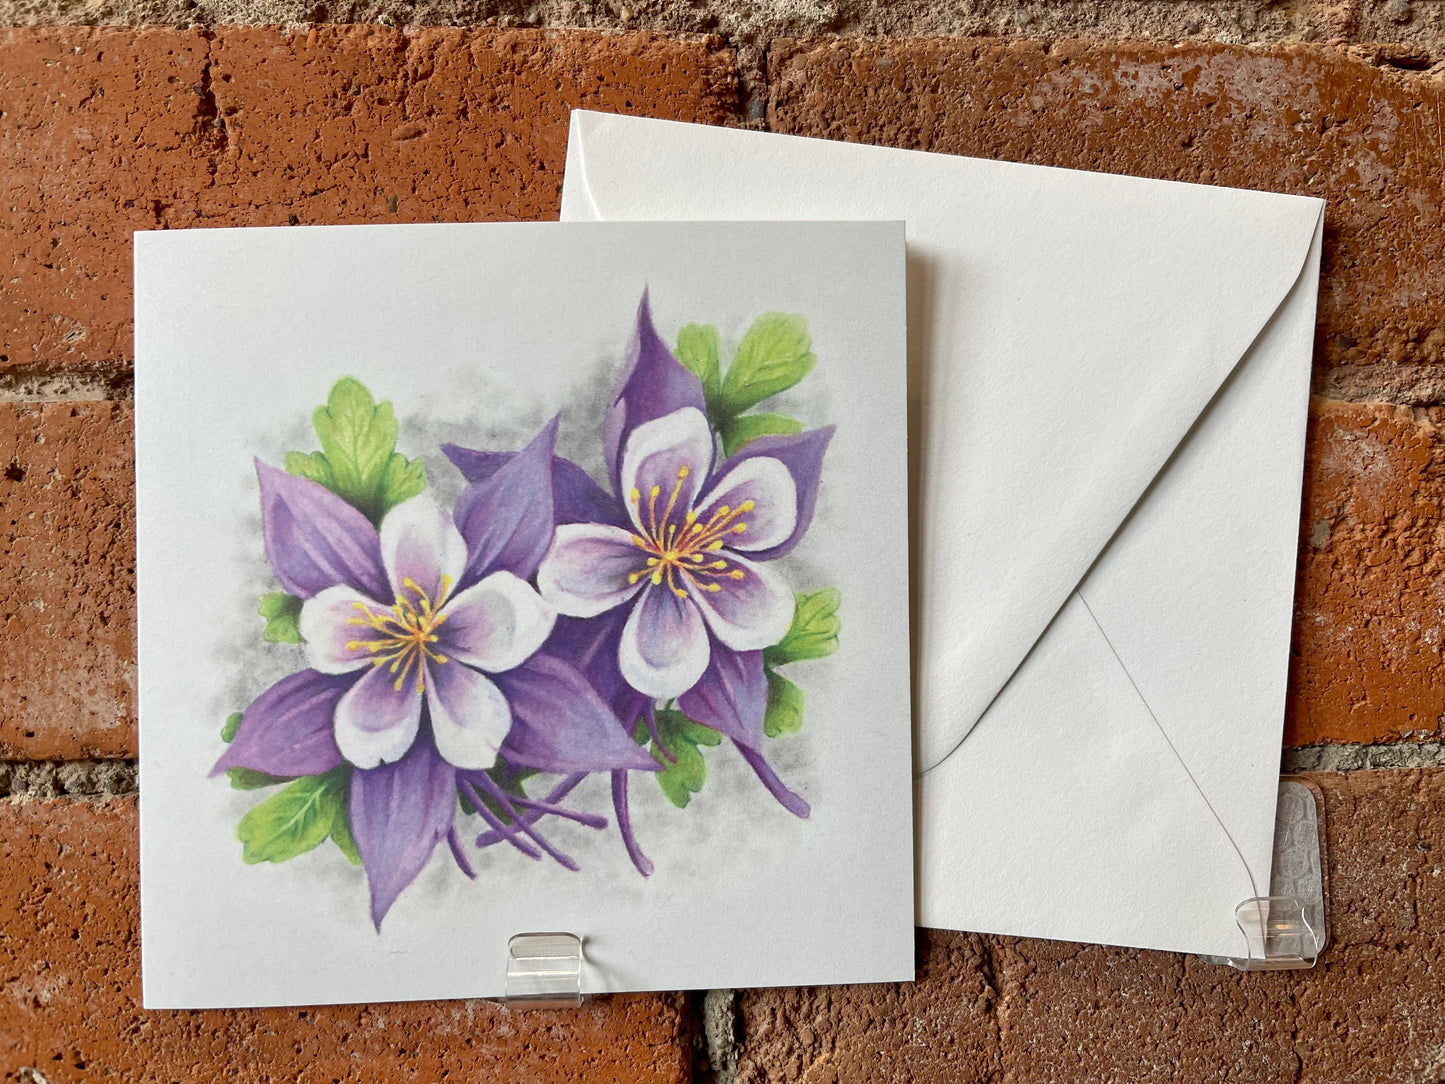 Native Fauna Art- Columbine Flowers Greeting Card